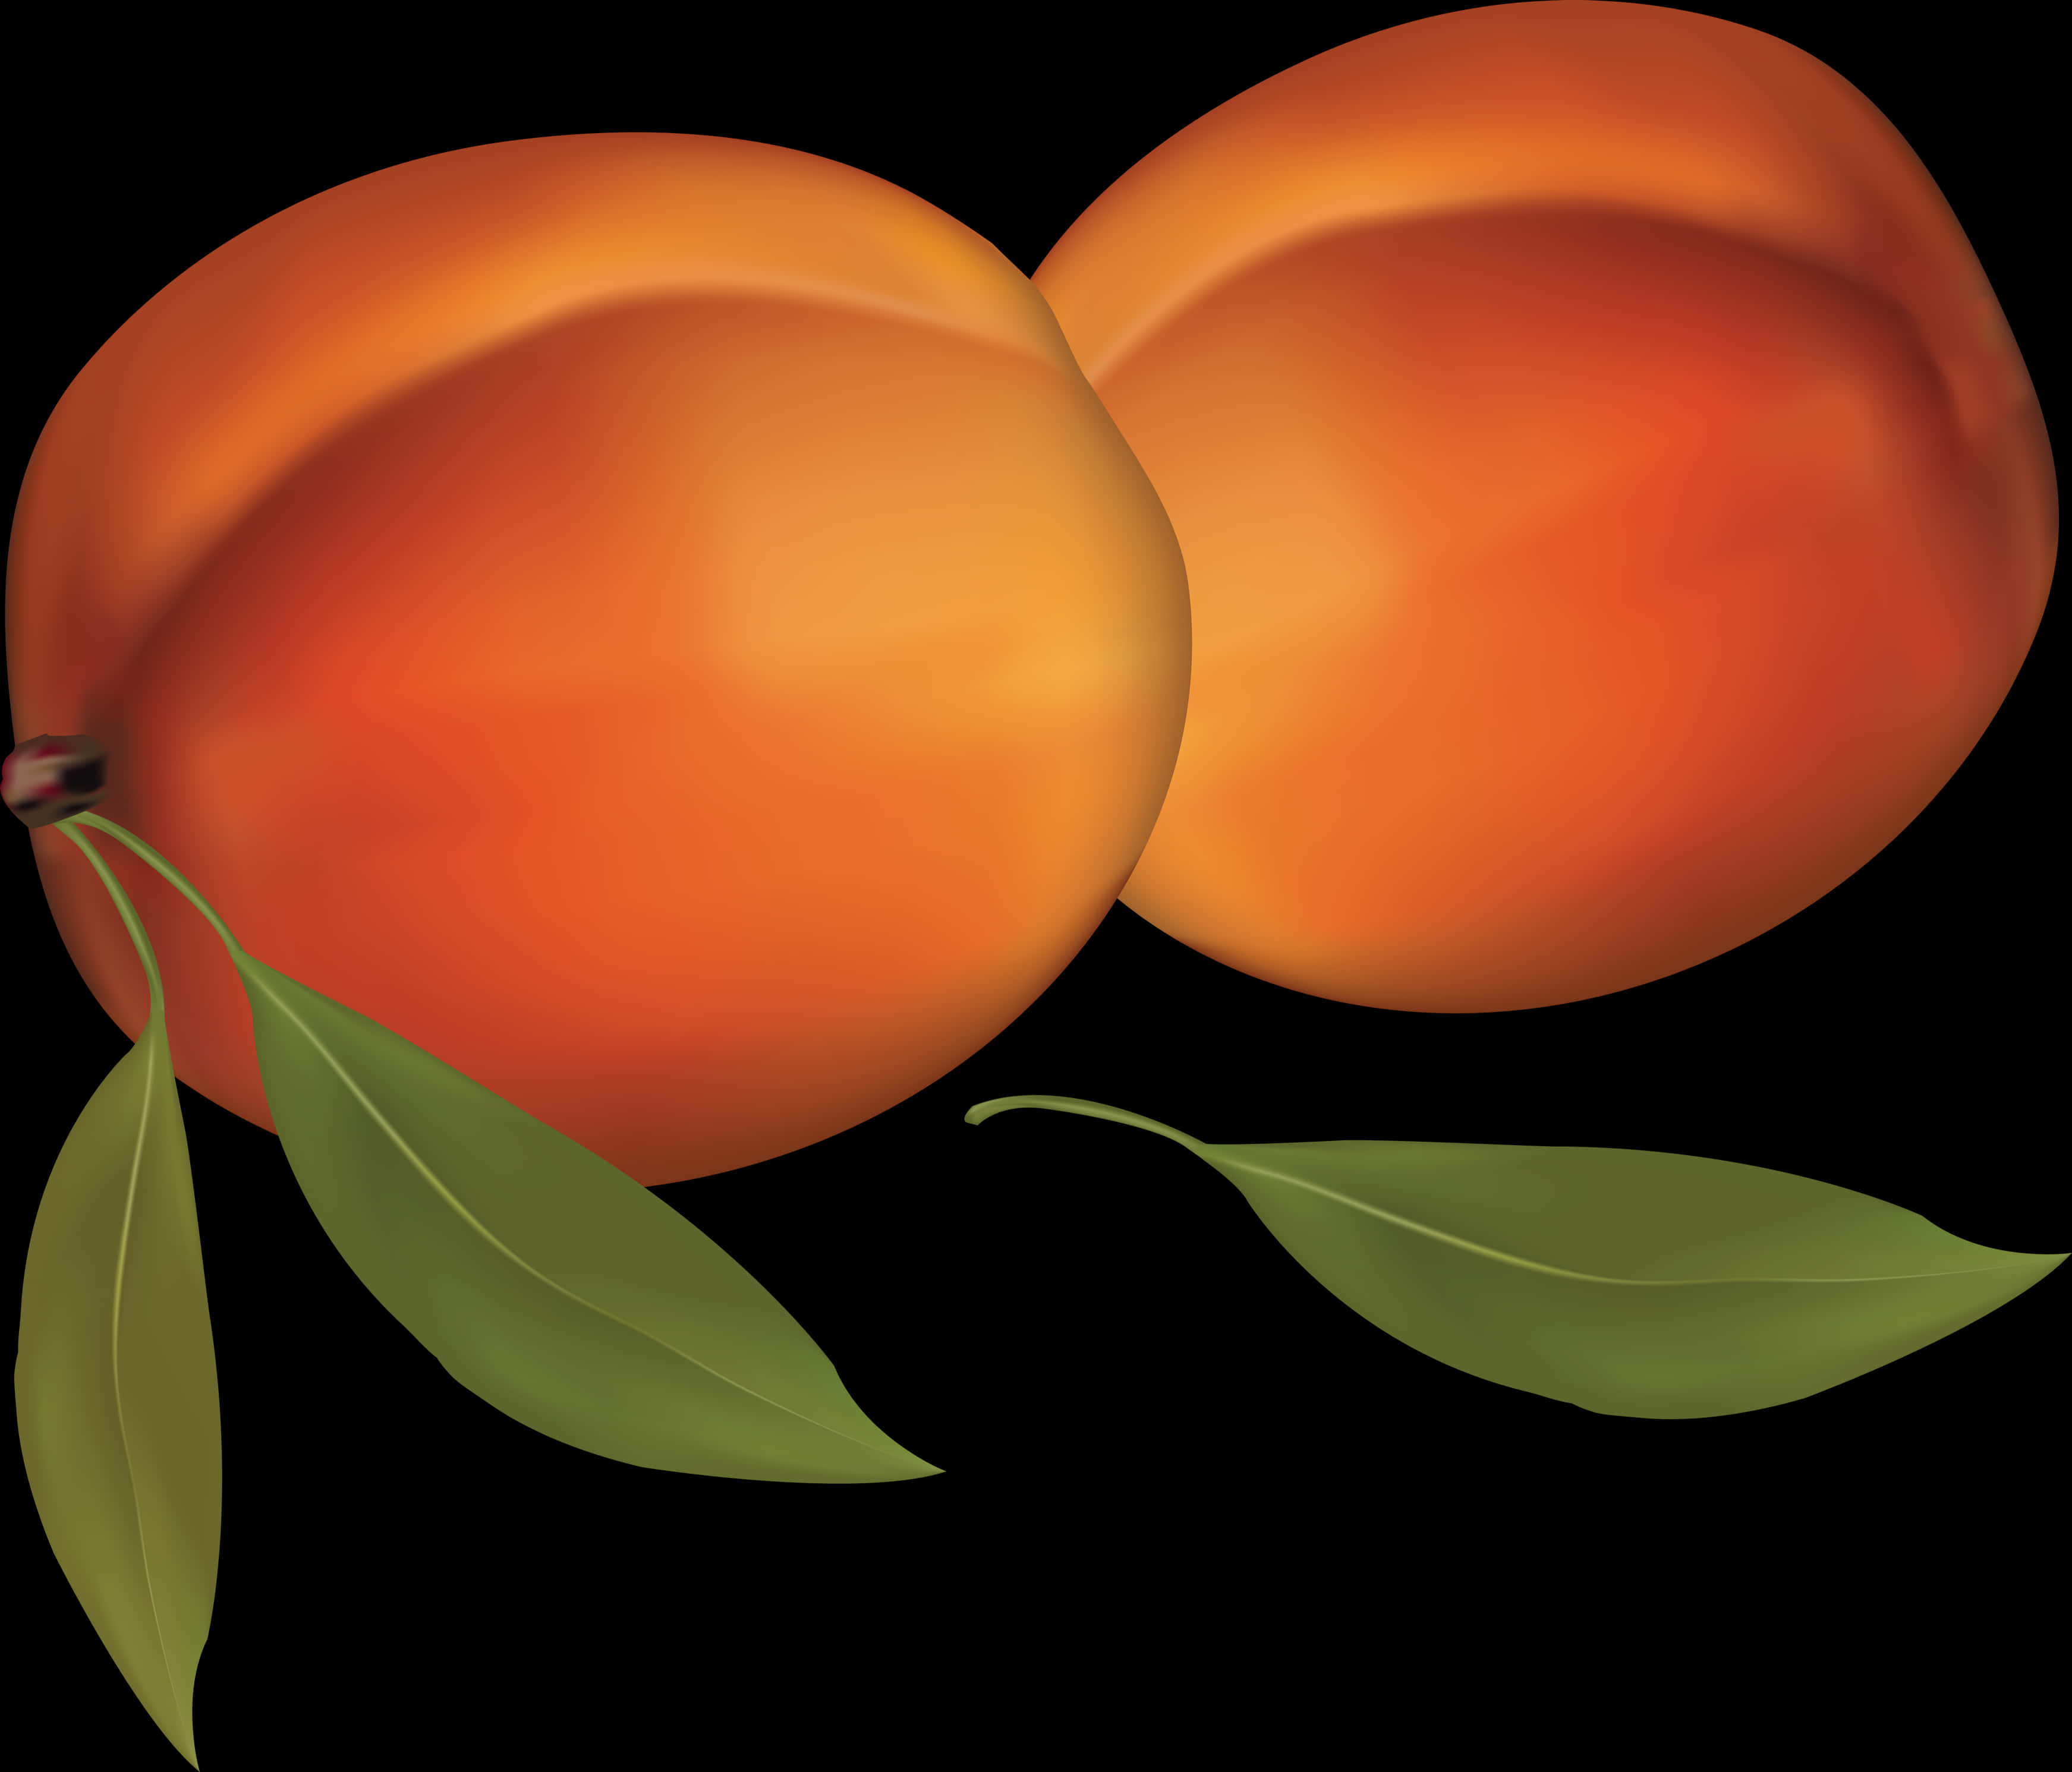 Two Peach Fruits